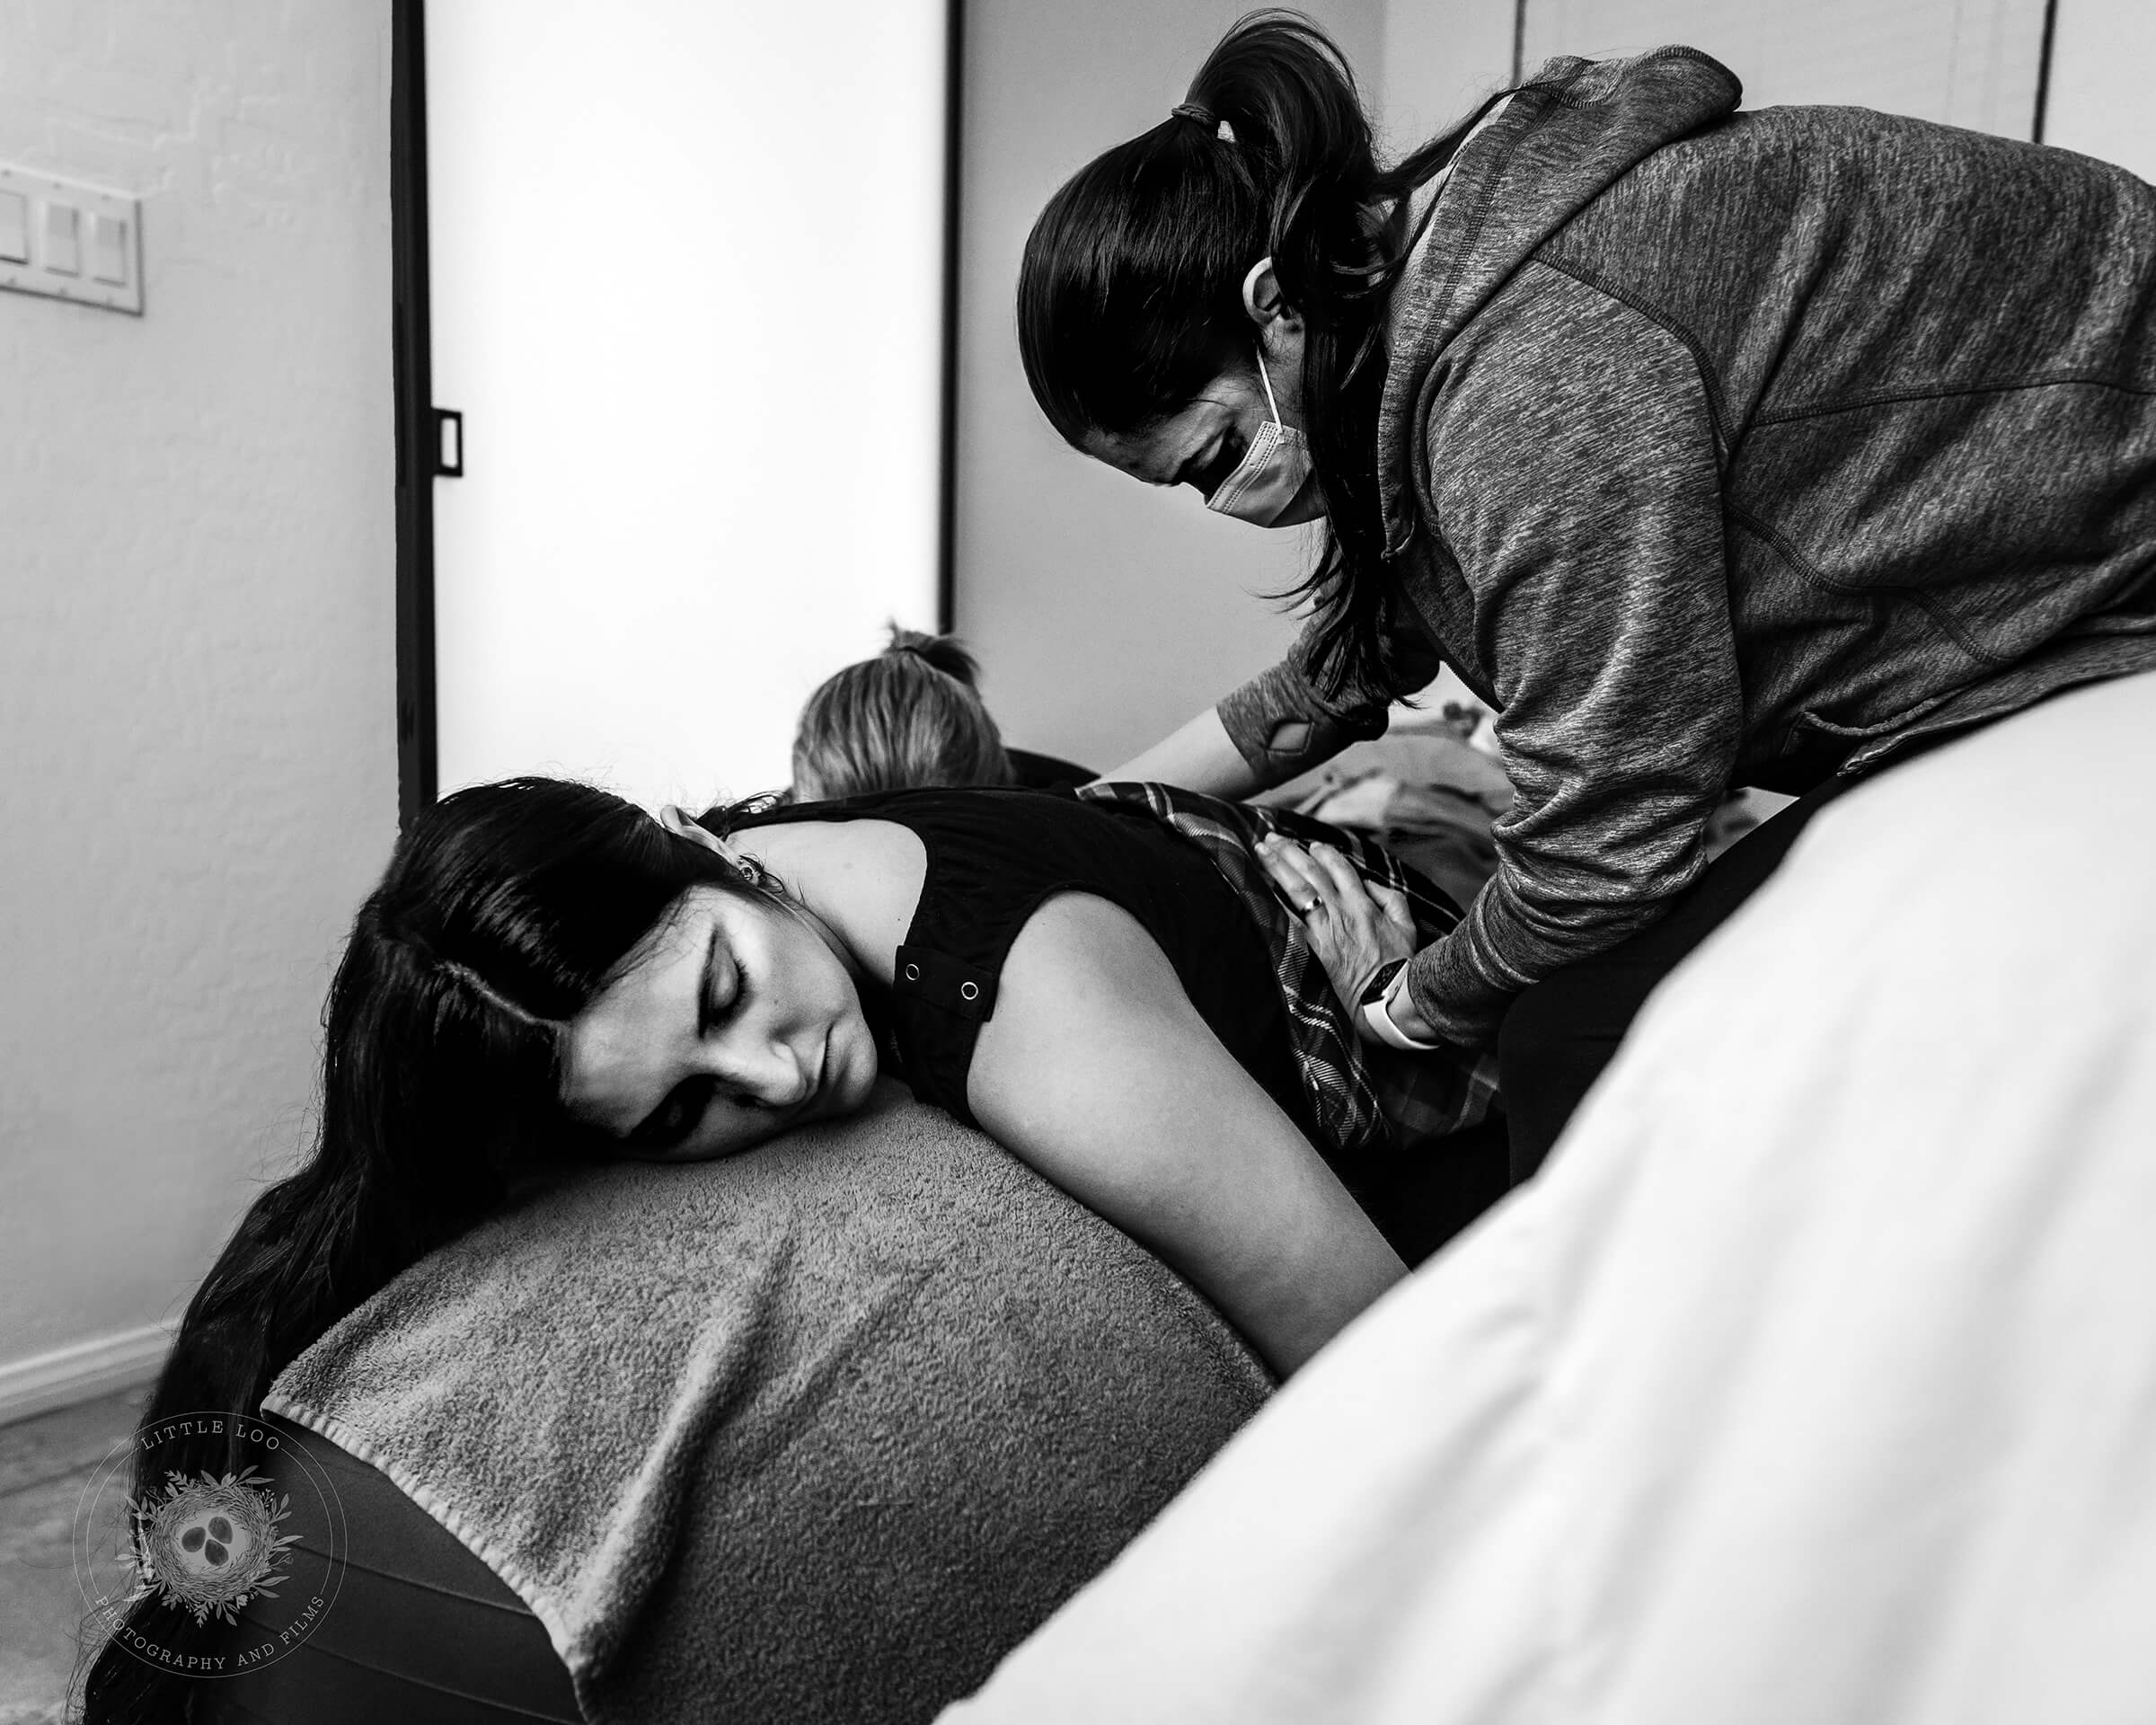 Marvelys Lopez massaging her patient's back during labor